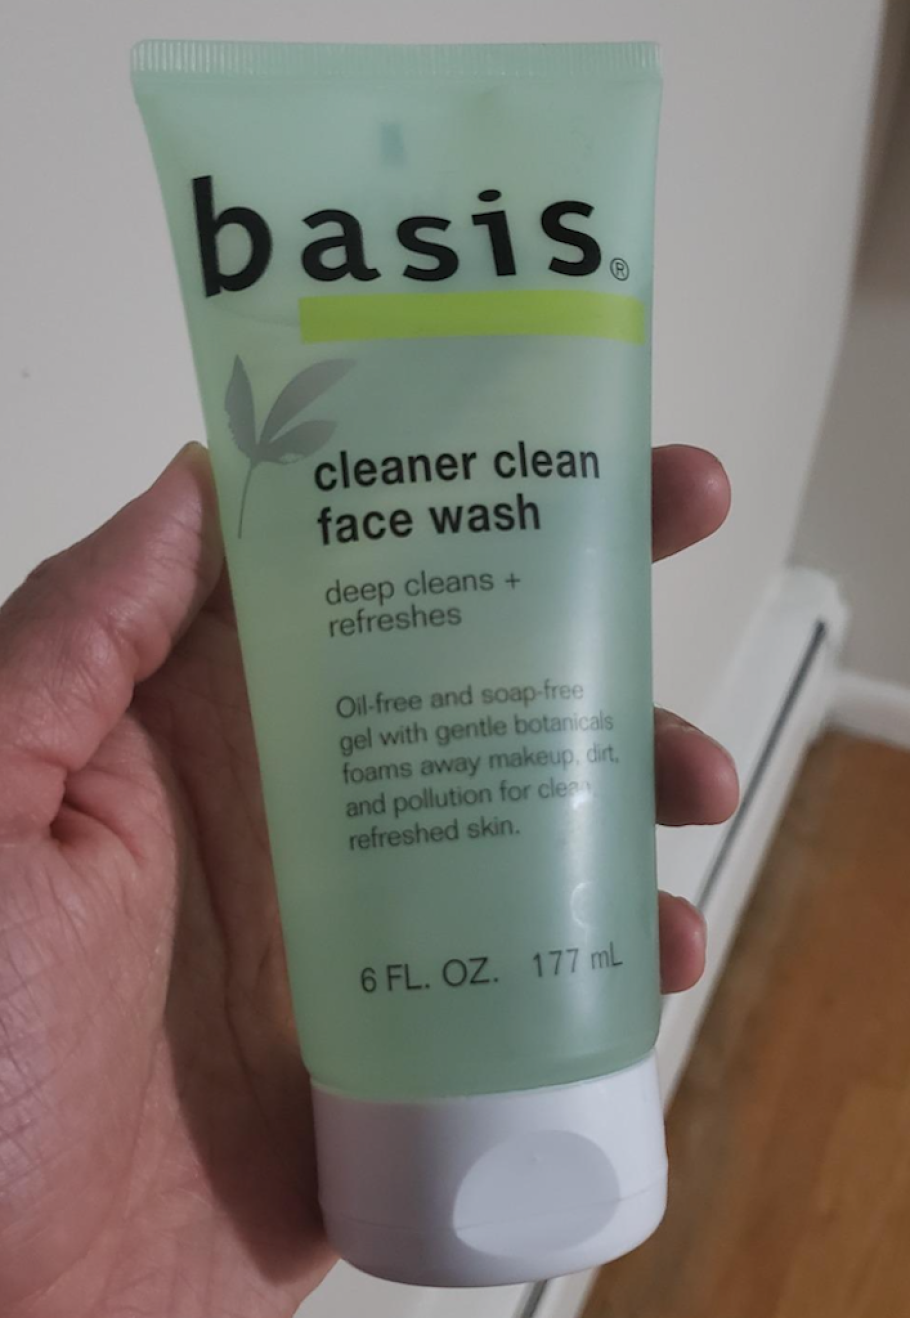 holding basis face wash